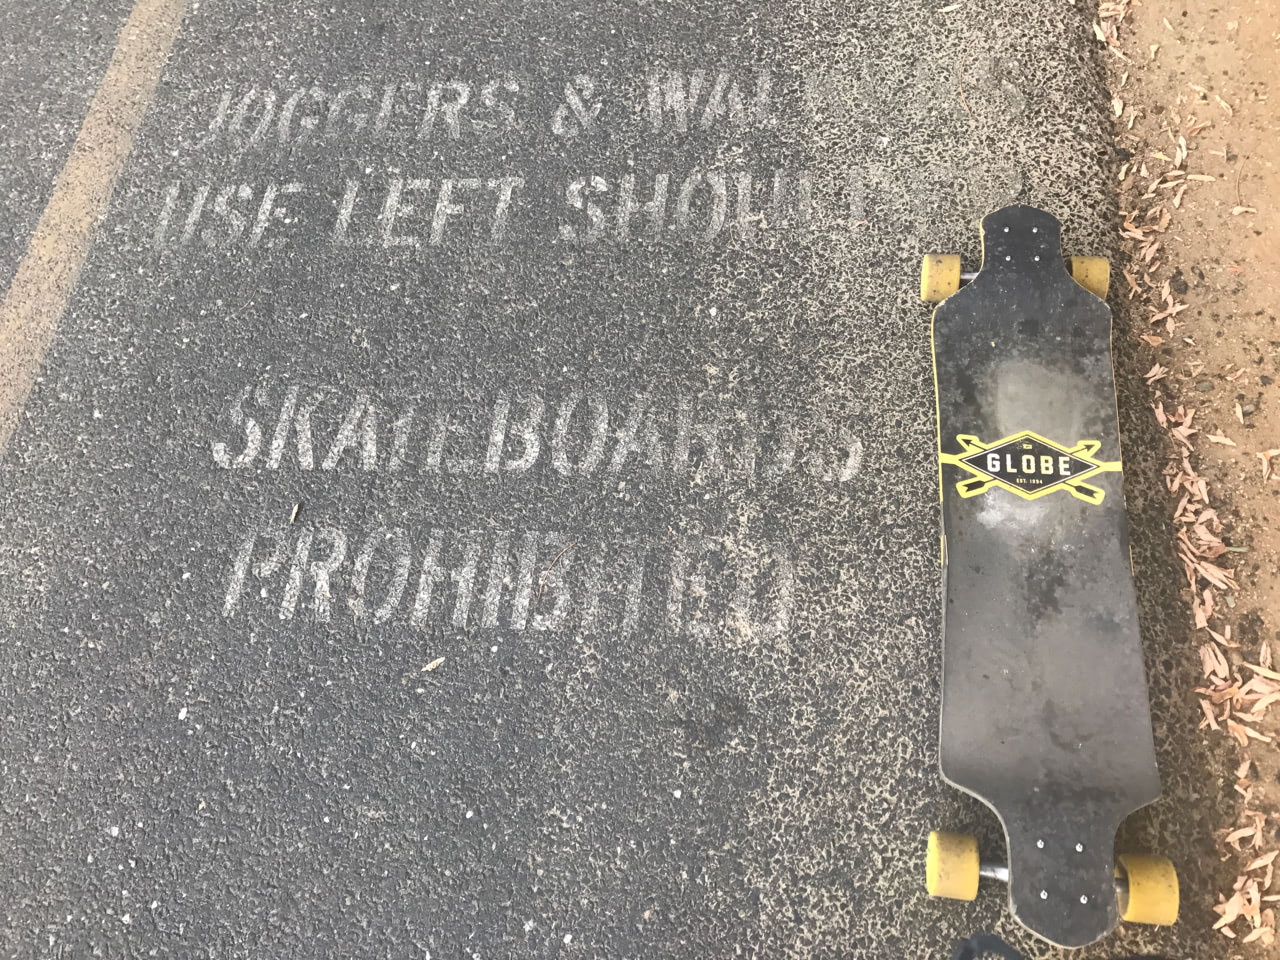 Skateboards Prohibited